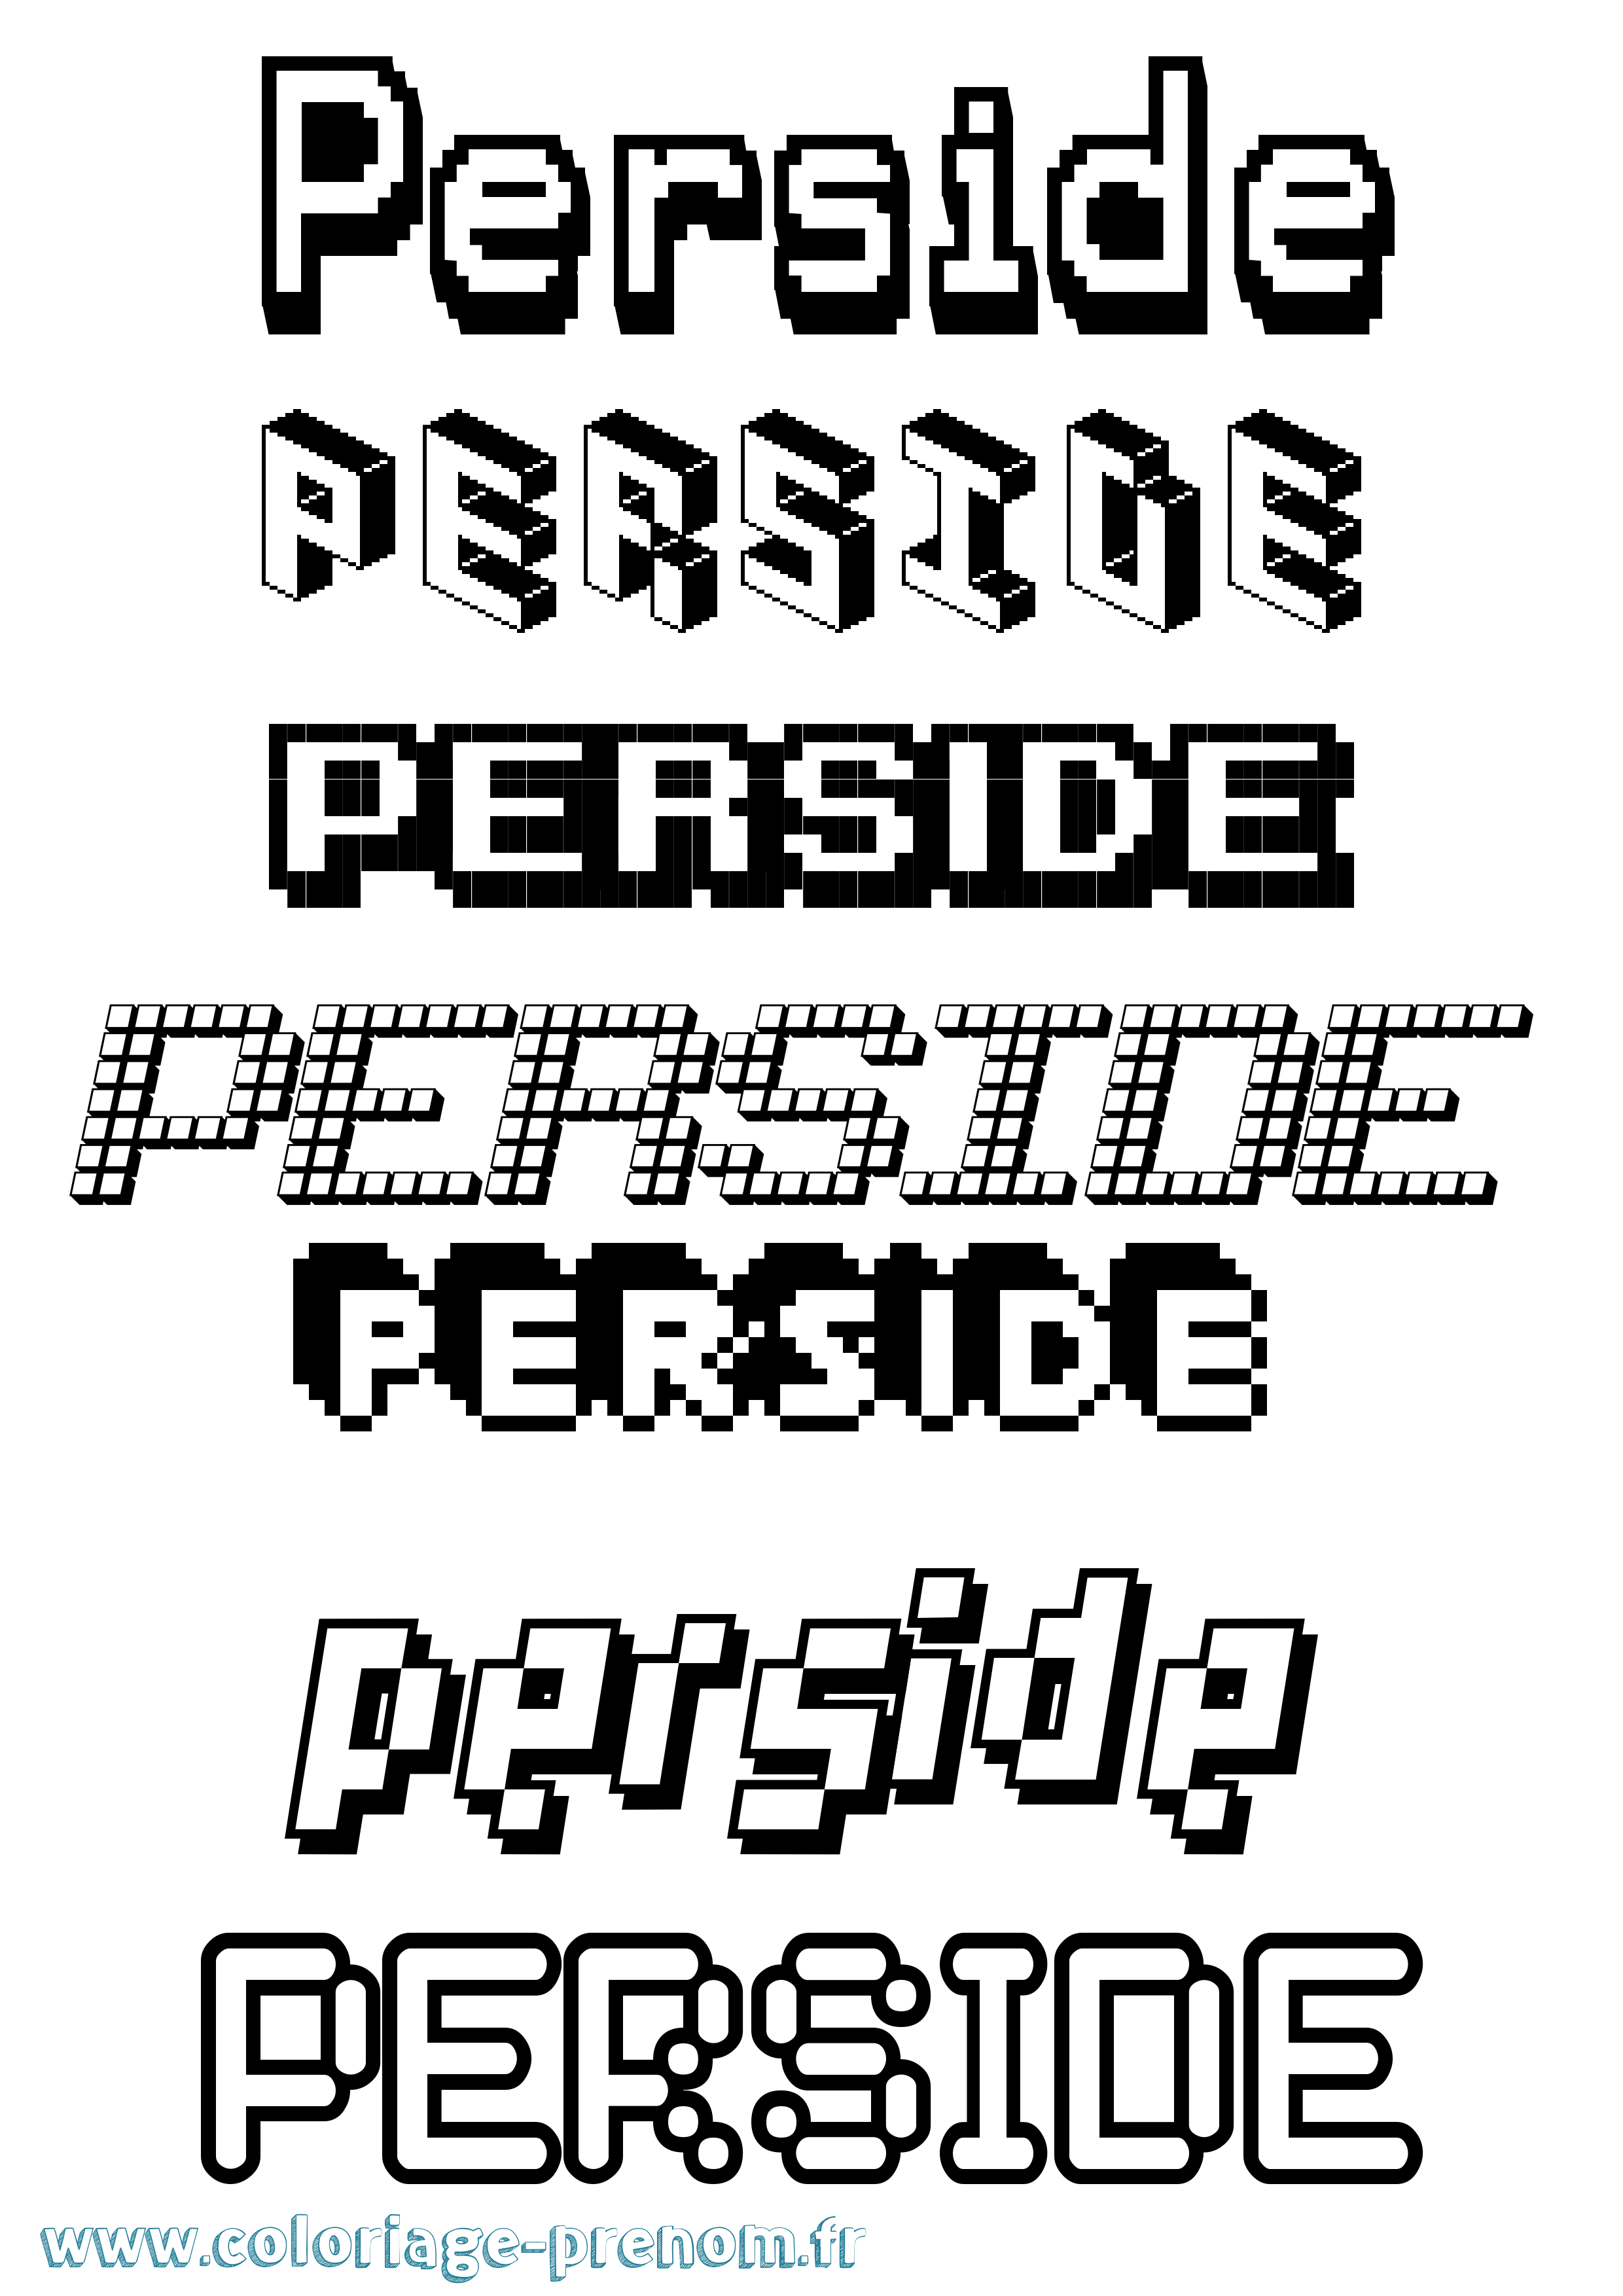 Coloriage prénom Perside Pixel